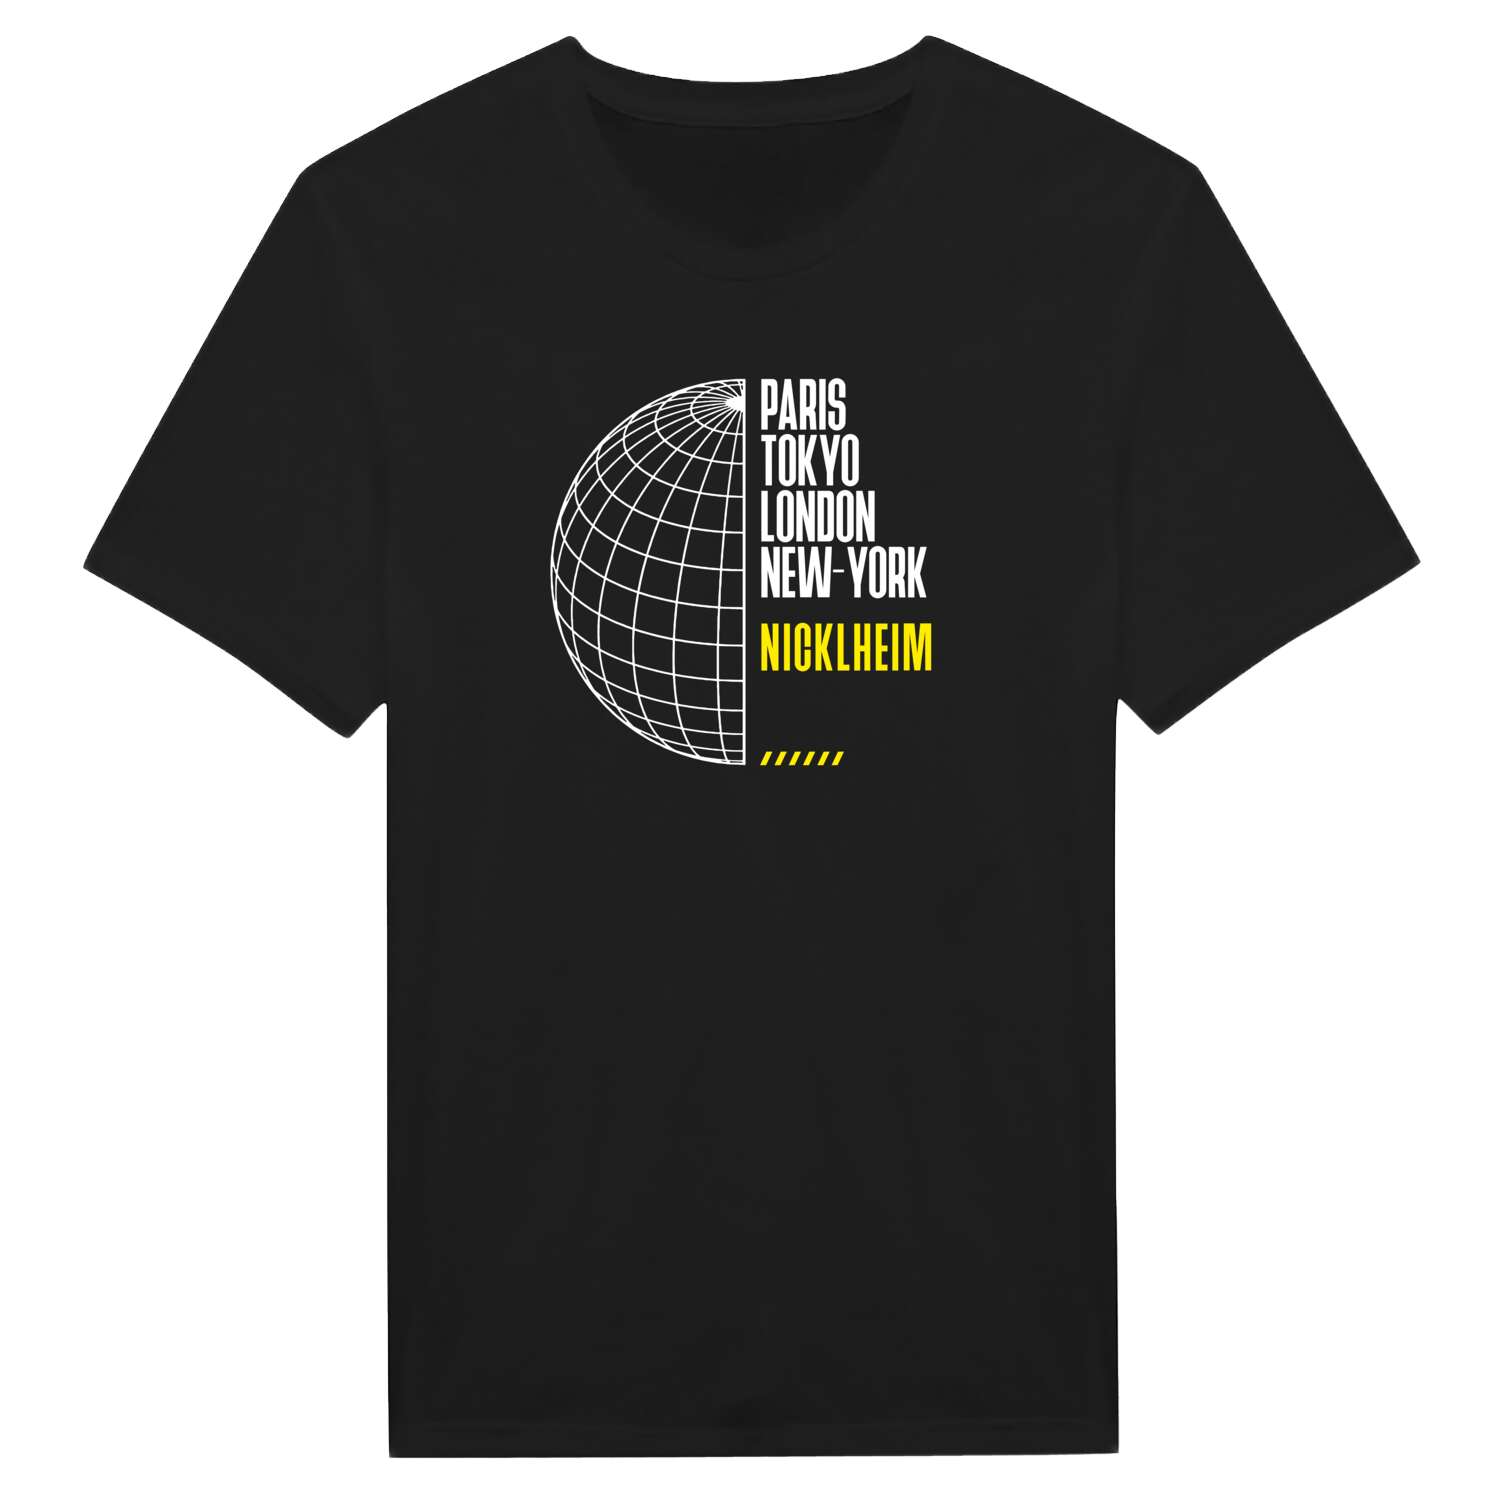 Nicklheim T-Shirt »Paris Tokyo London«